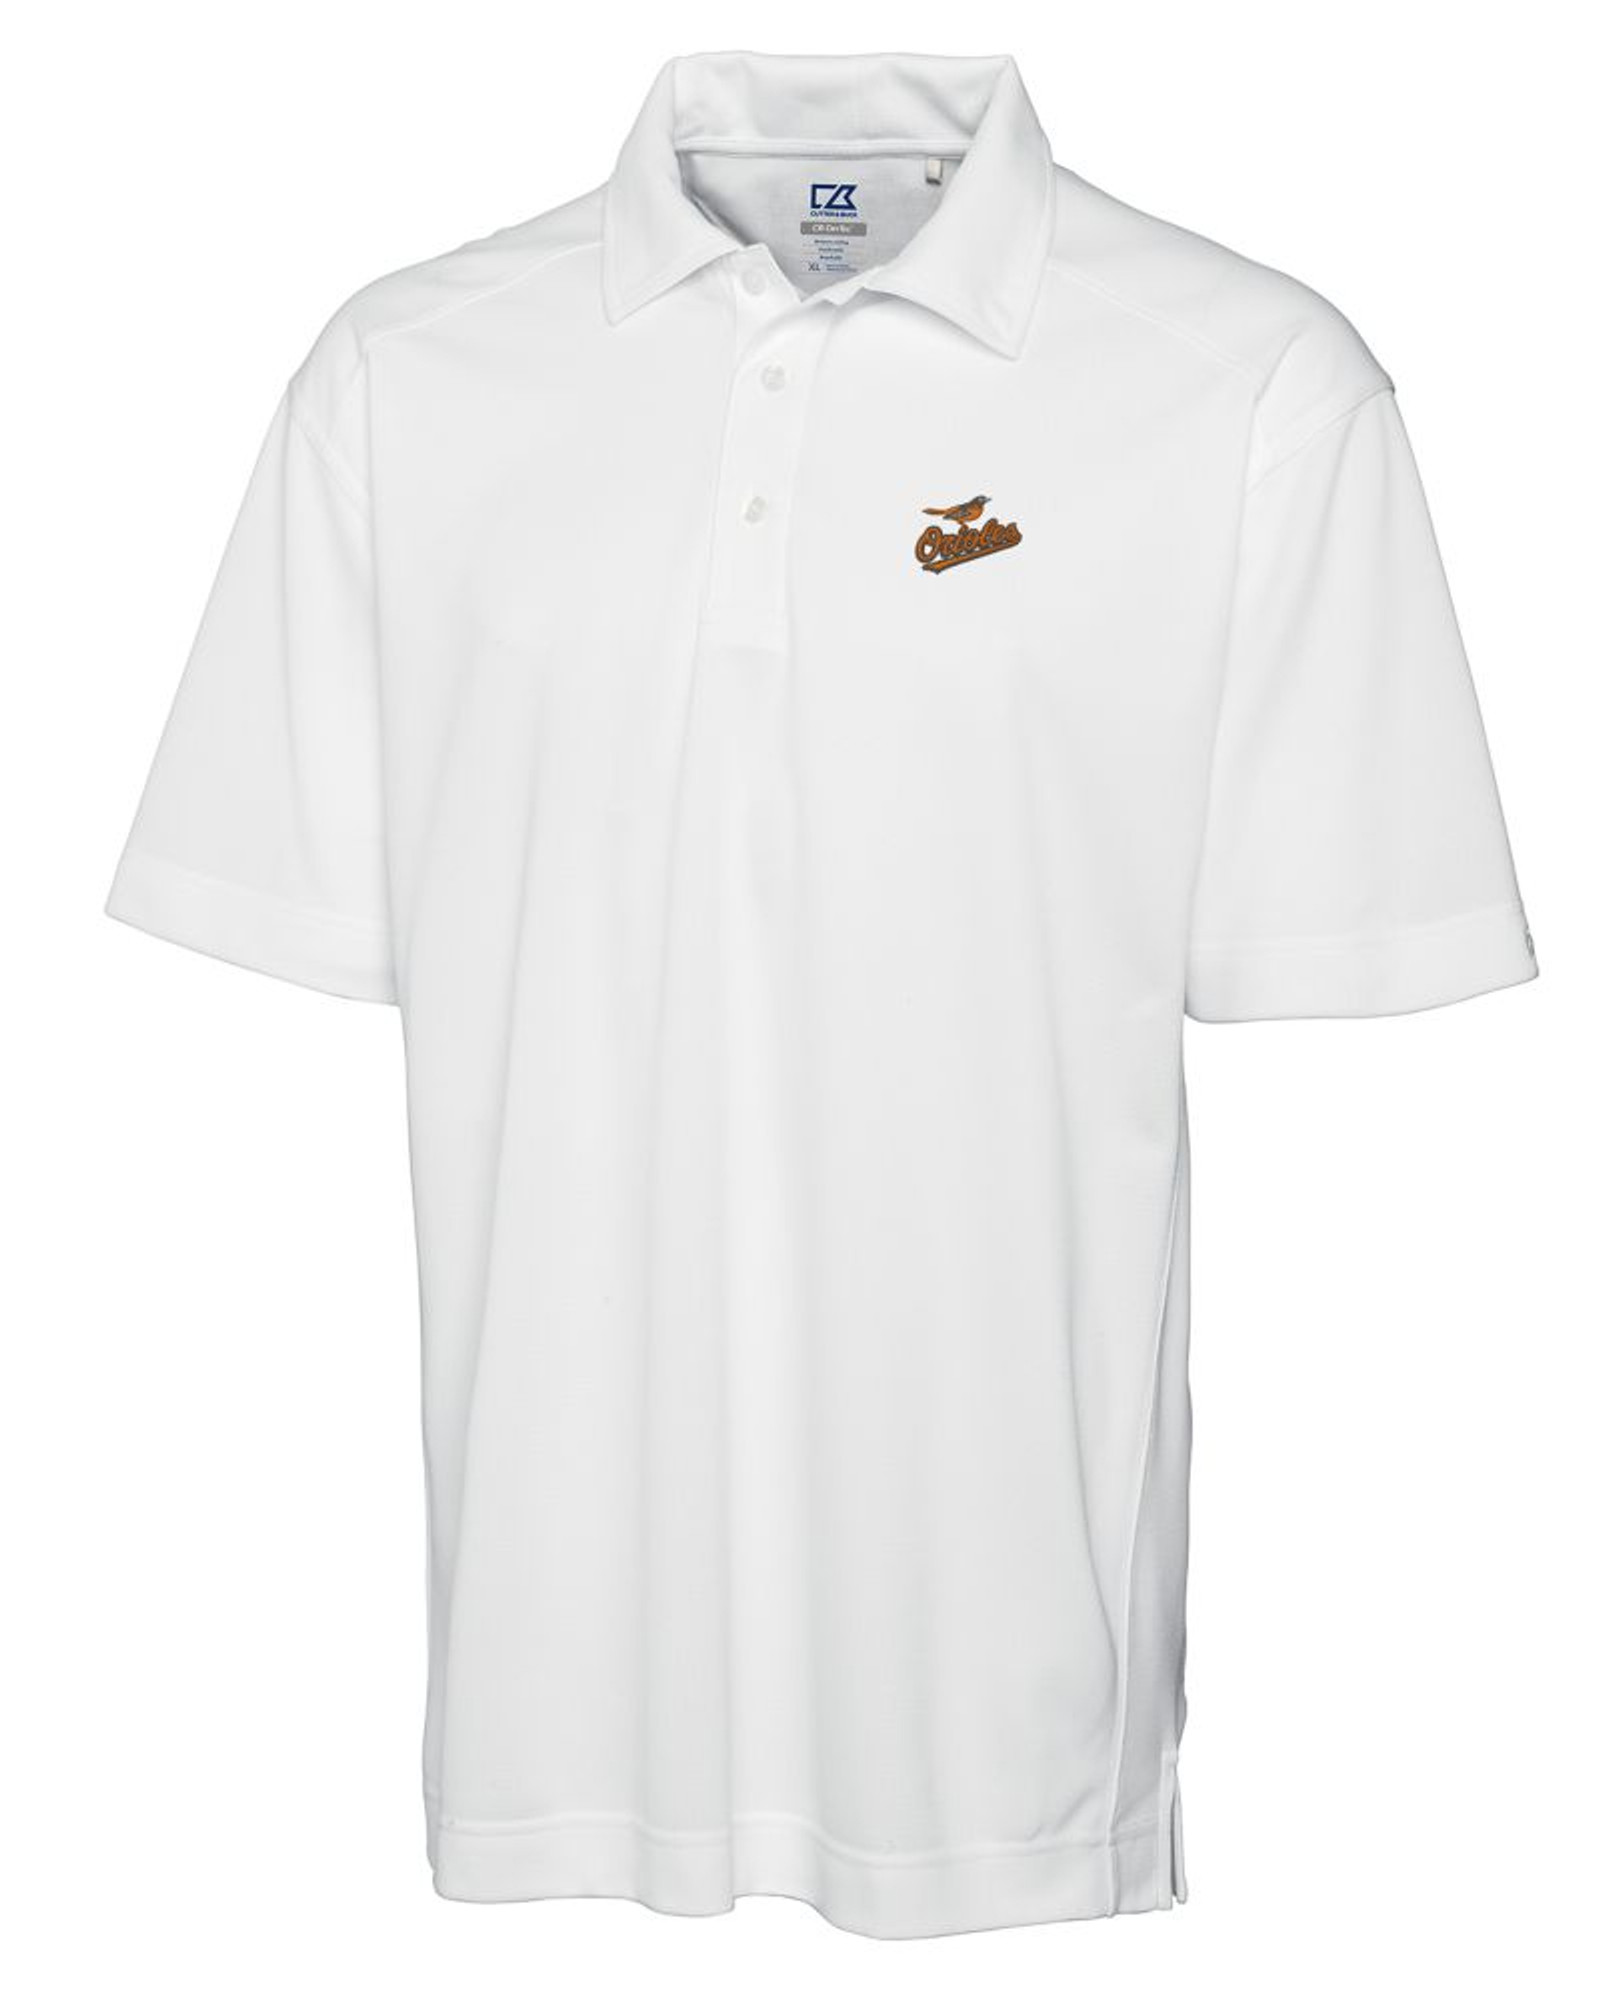 Official Baltimore Orioles Polos, Orioles Golf Shirts, Dress Shirts